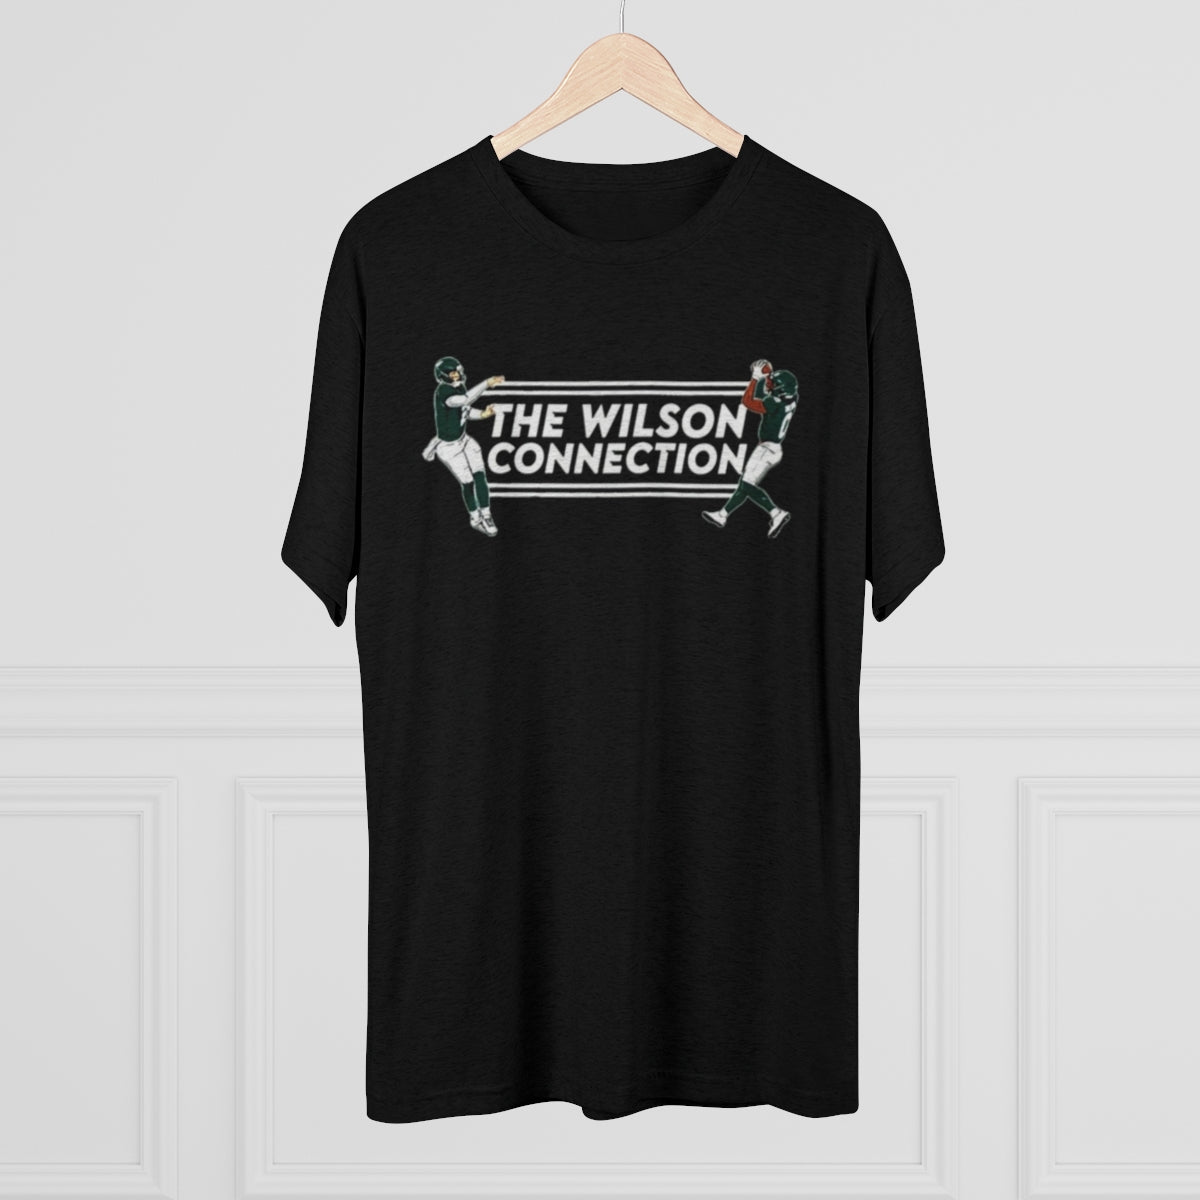 Wilson Connection Shirt - IsGoodBrand